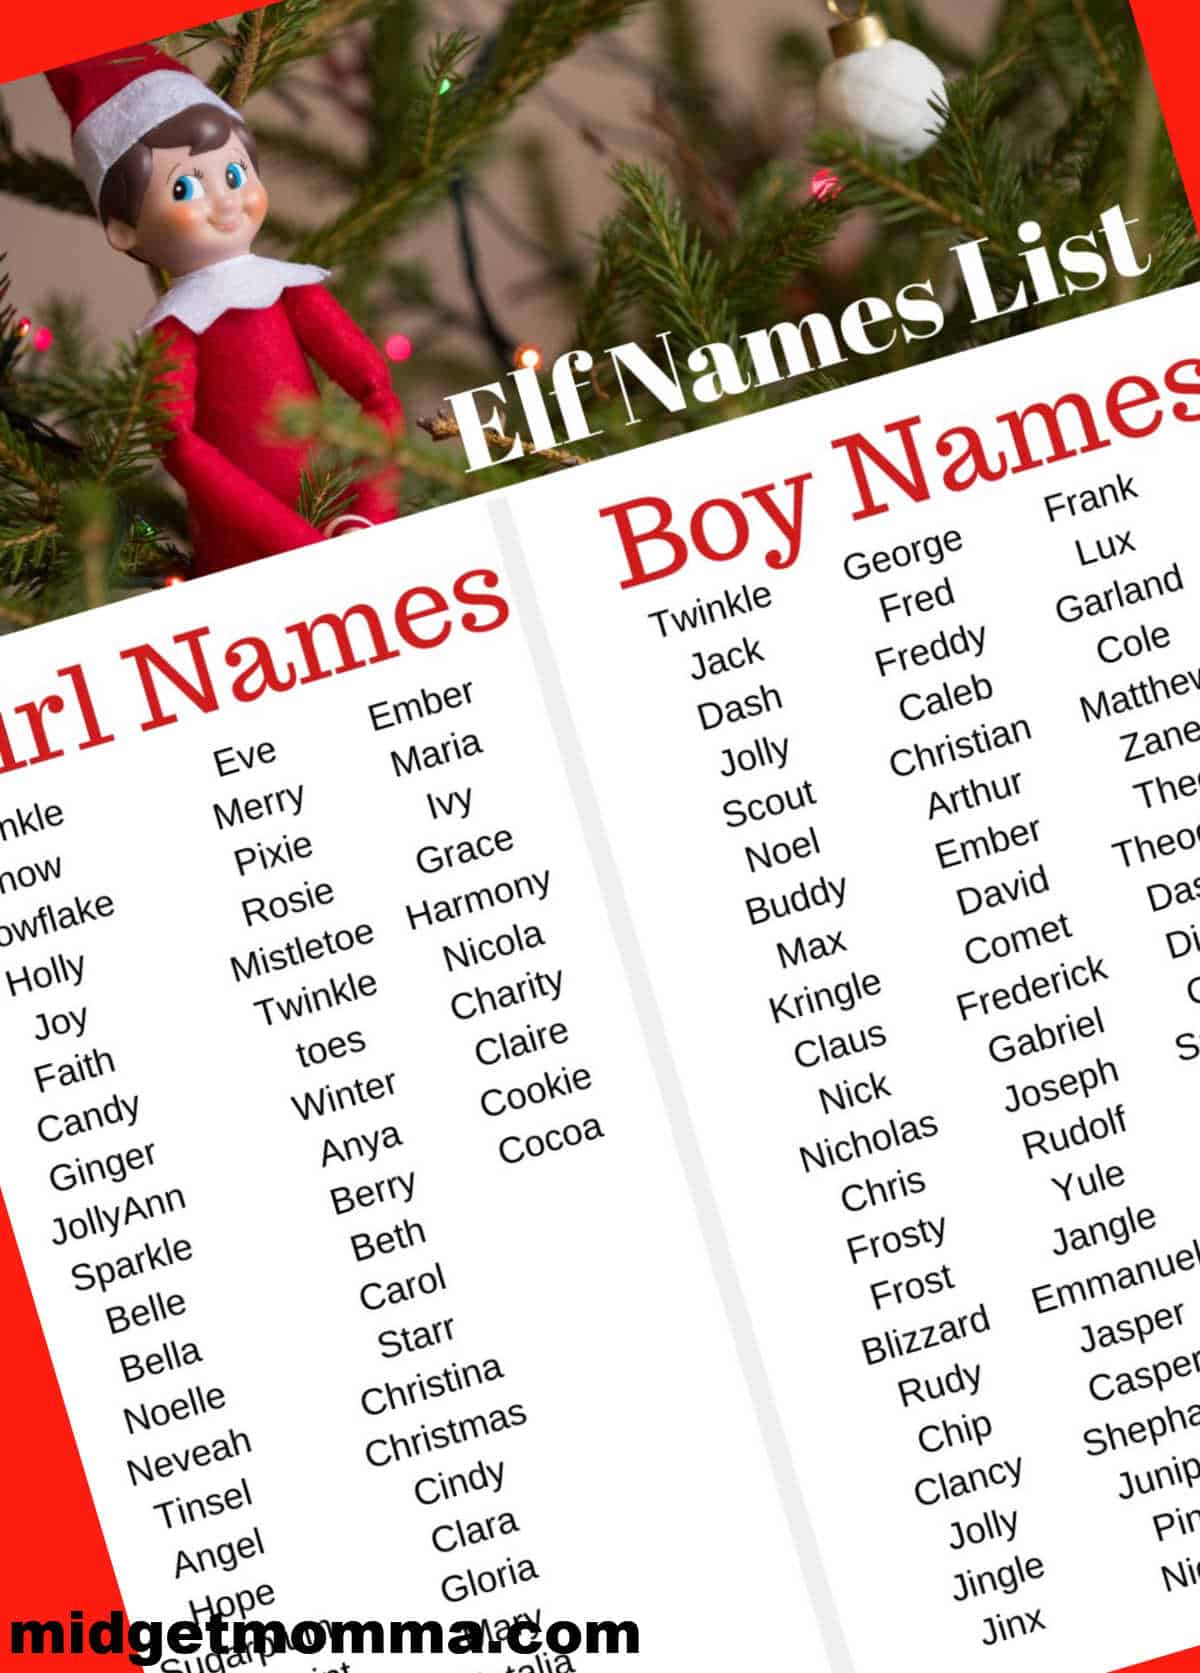 Elf on the shelf names printable list - girl elf names and boy elf names